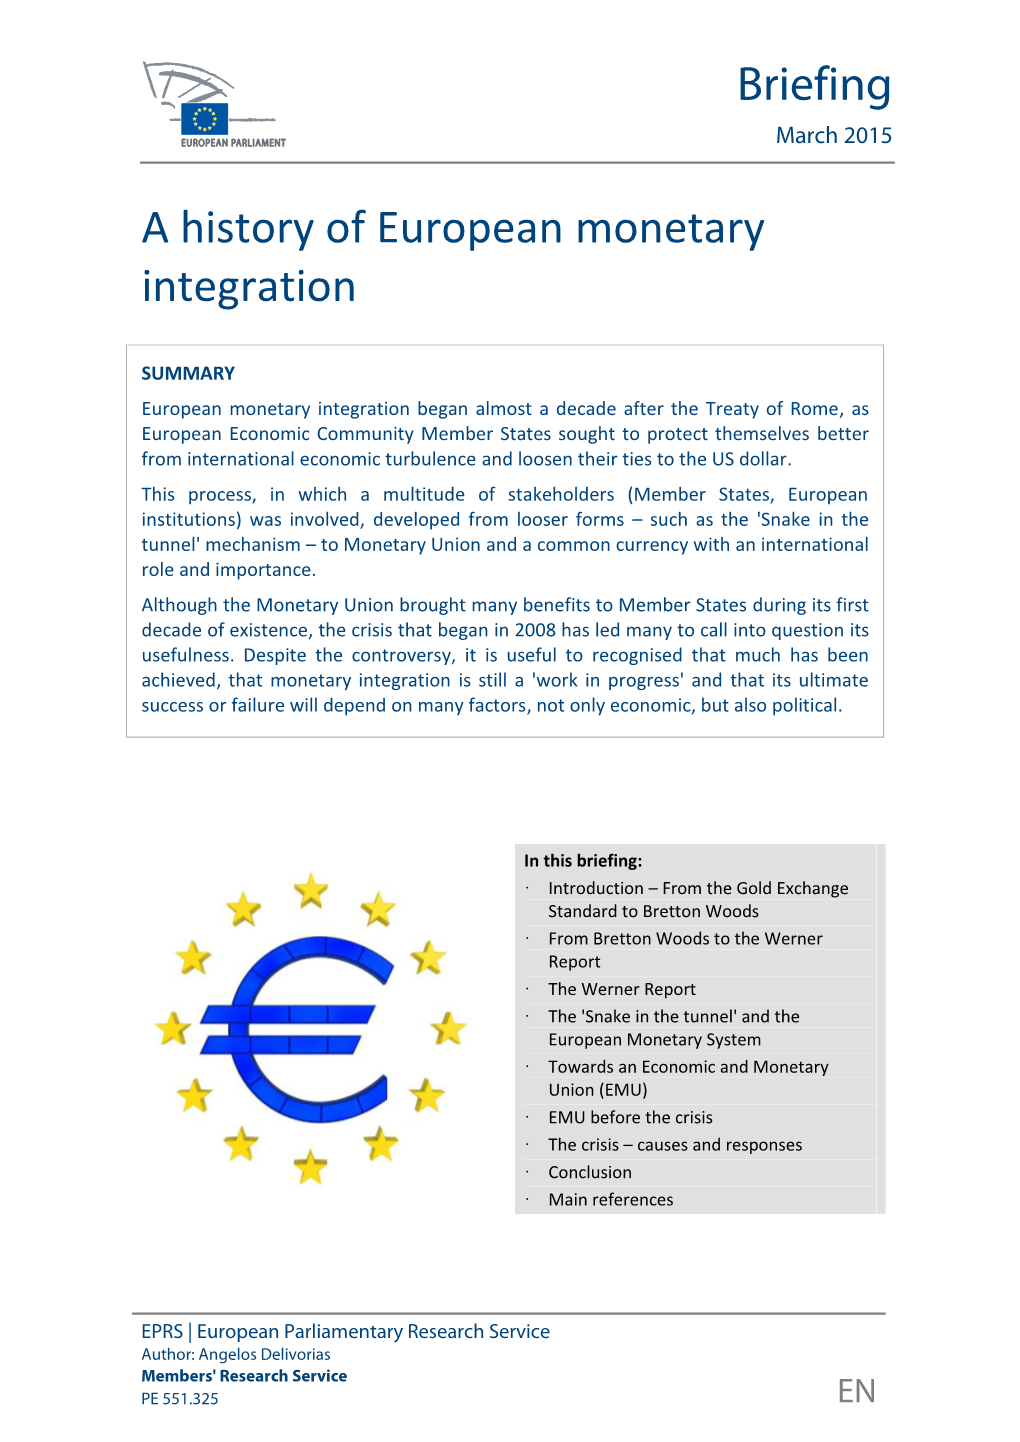 History of European Monetary Integration